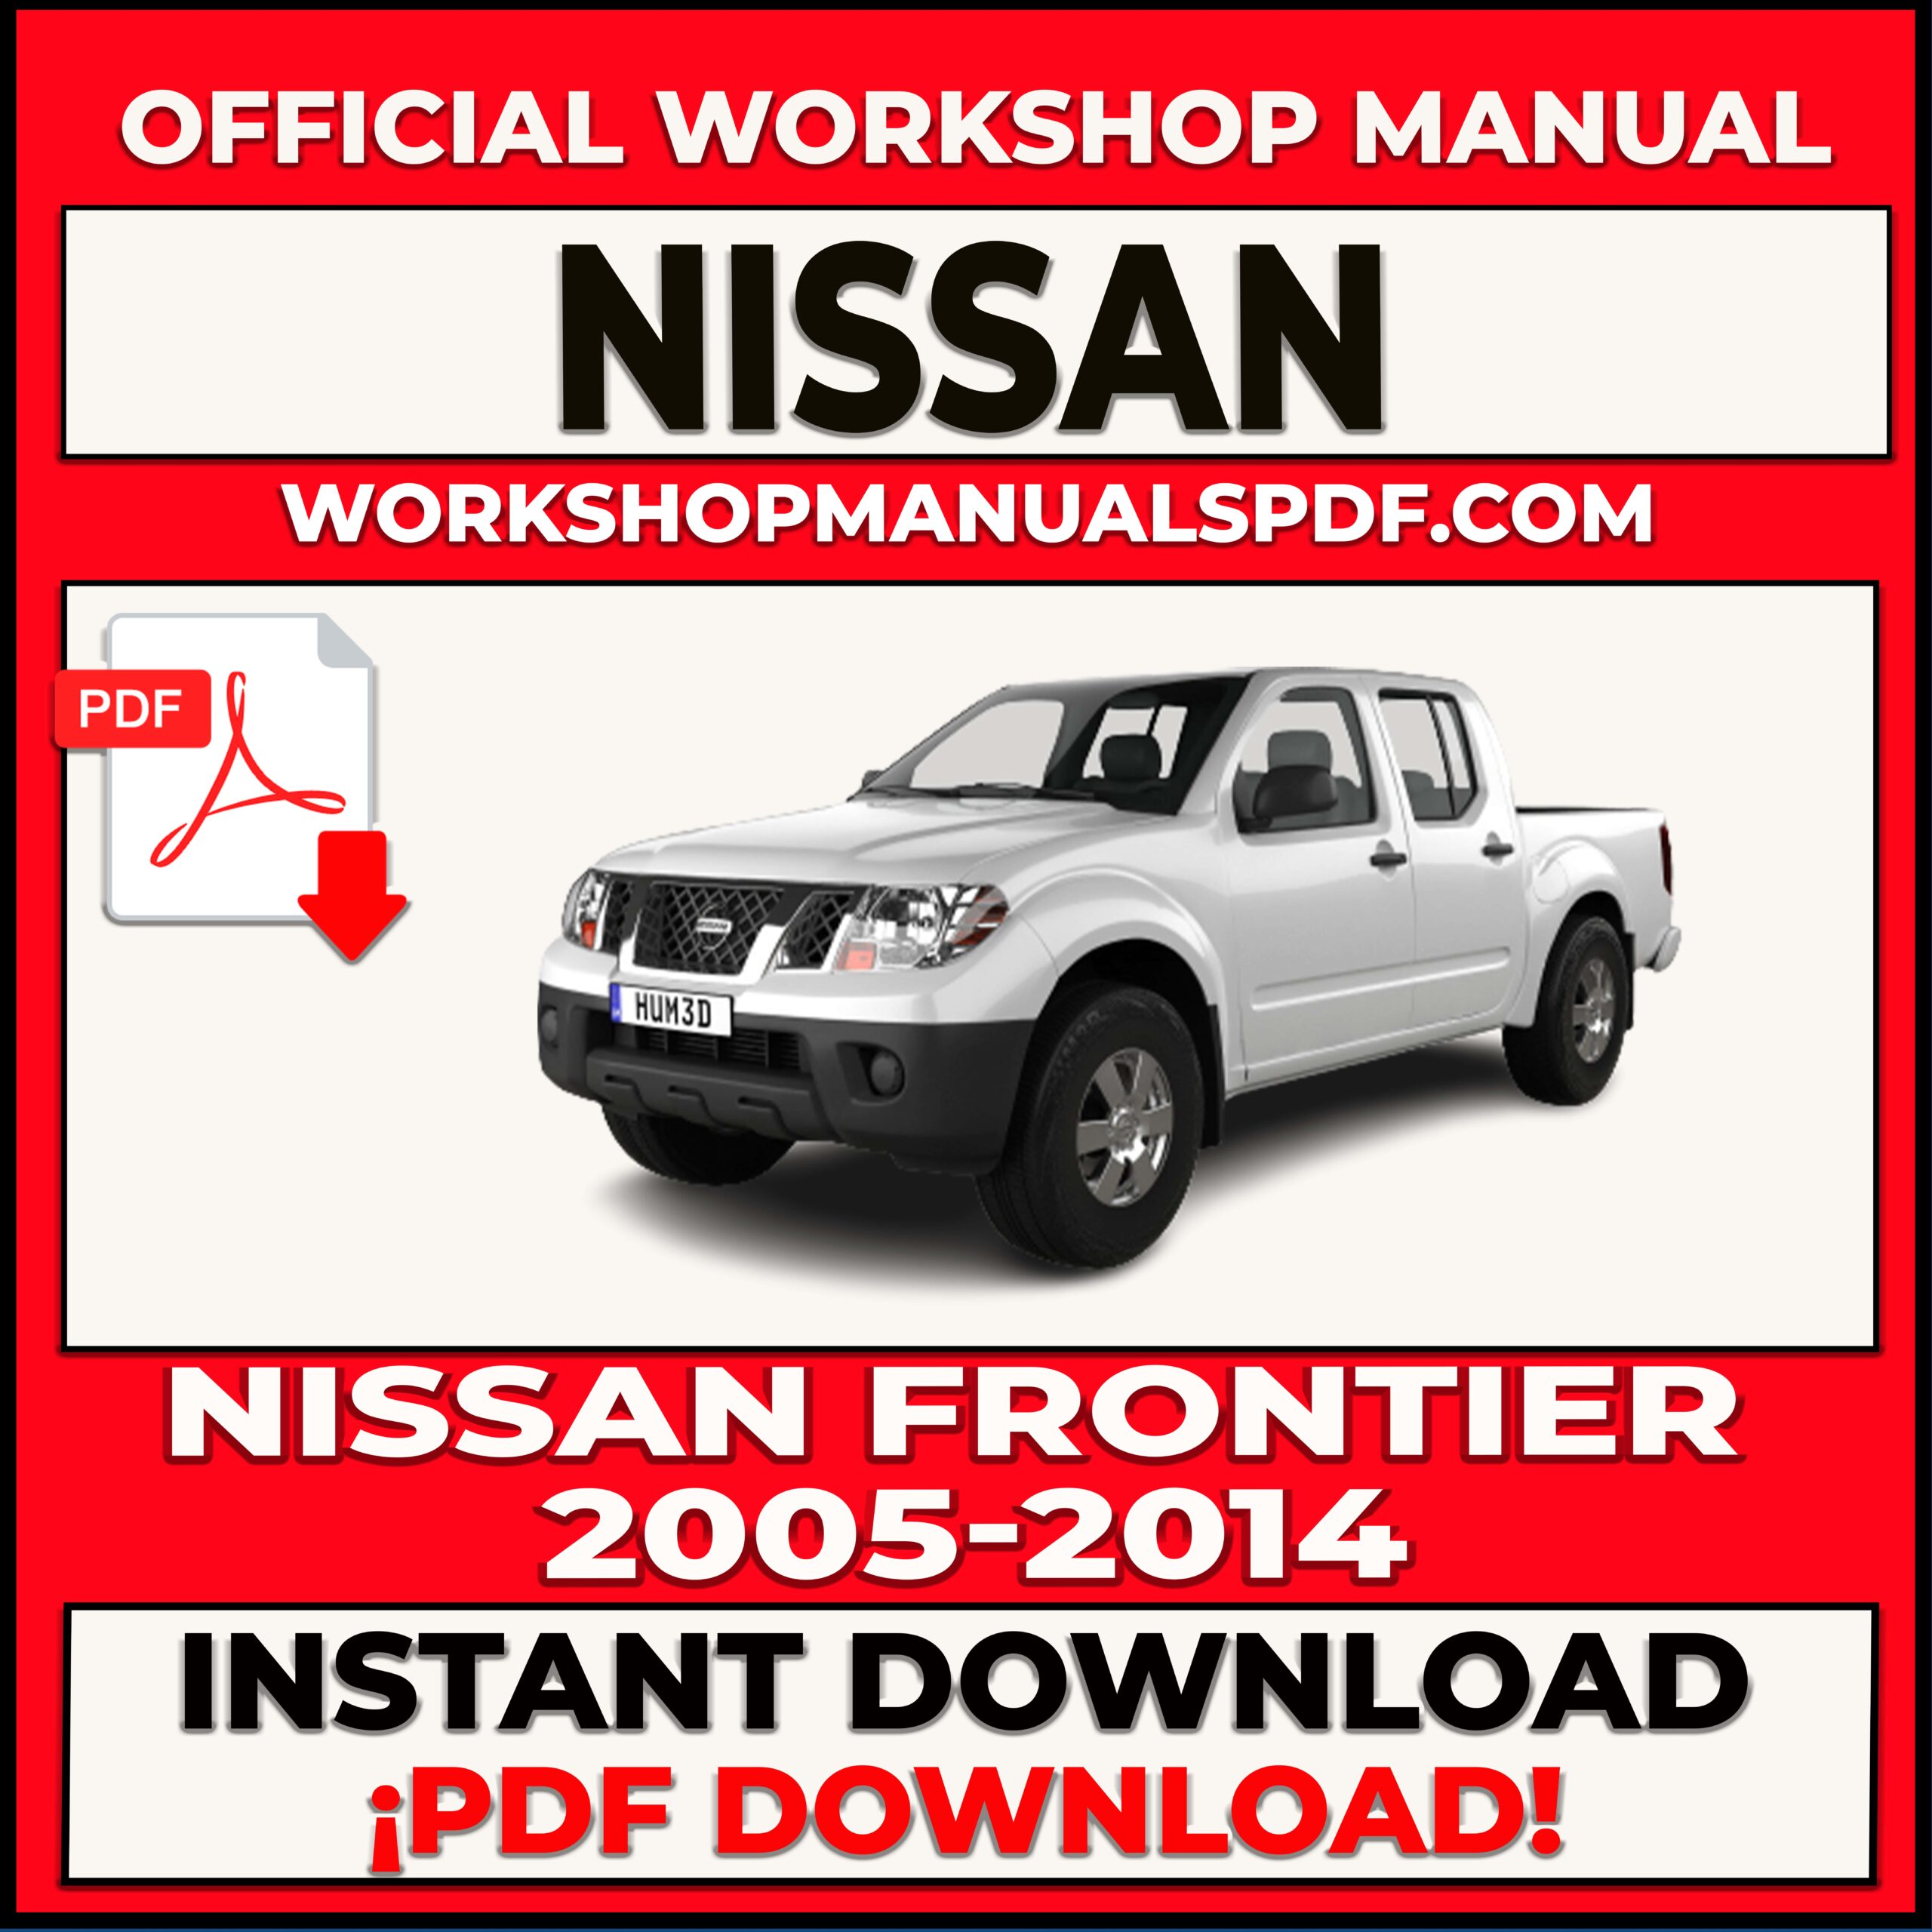 Nissan Frontier 2005-2014 Workshop Repair Manual